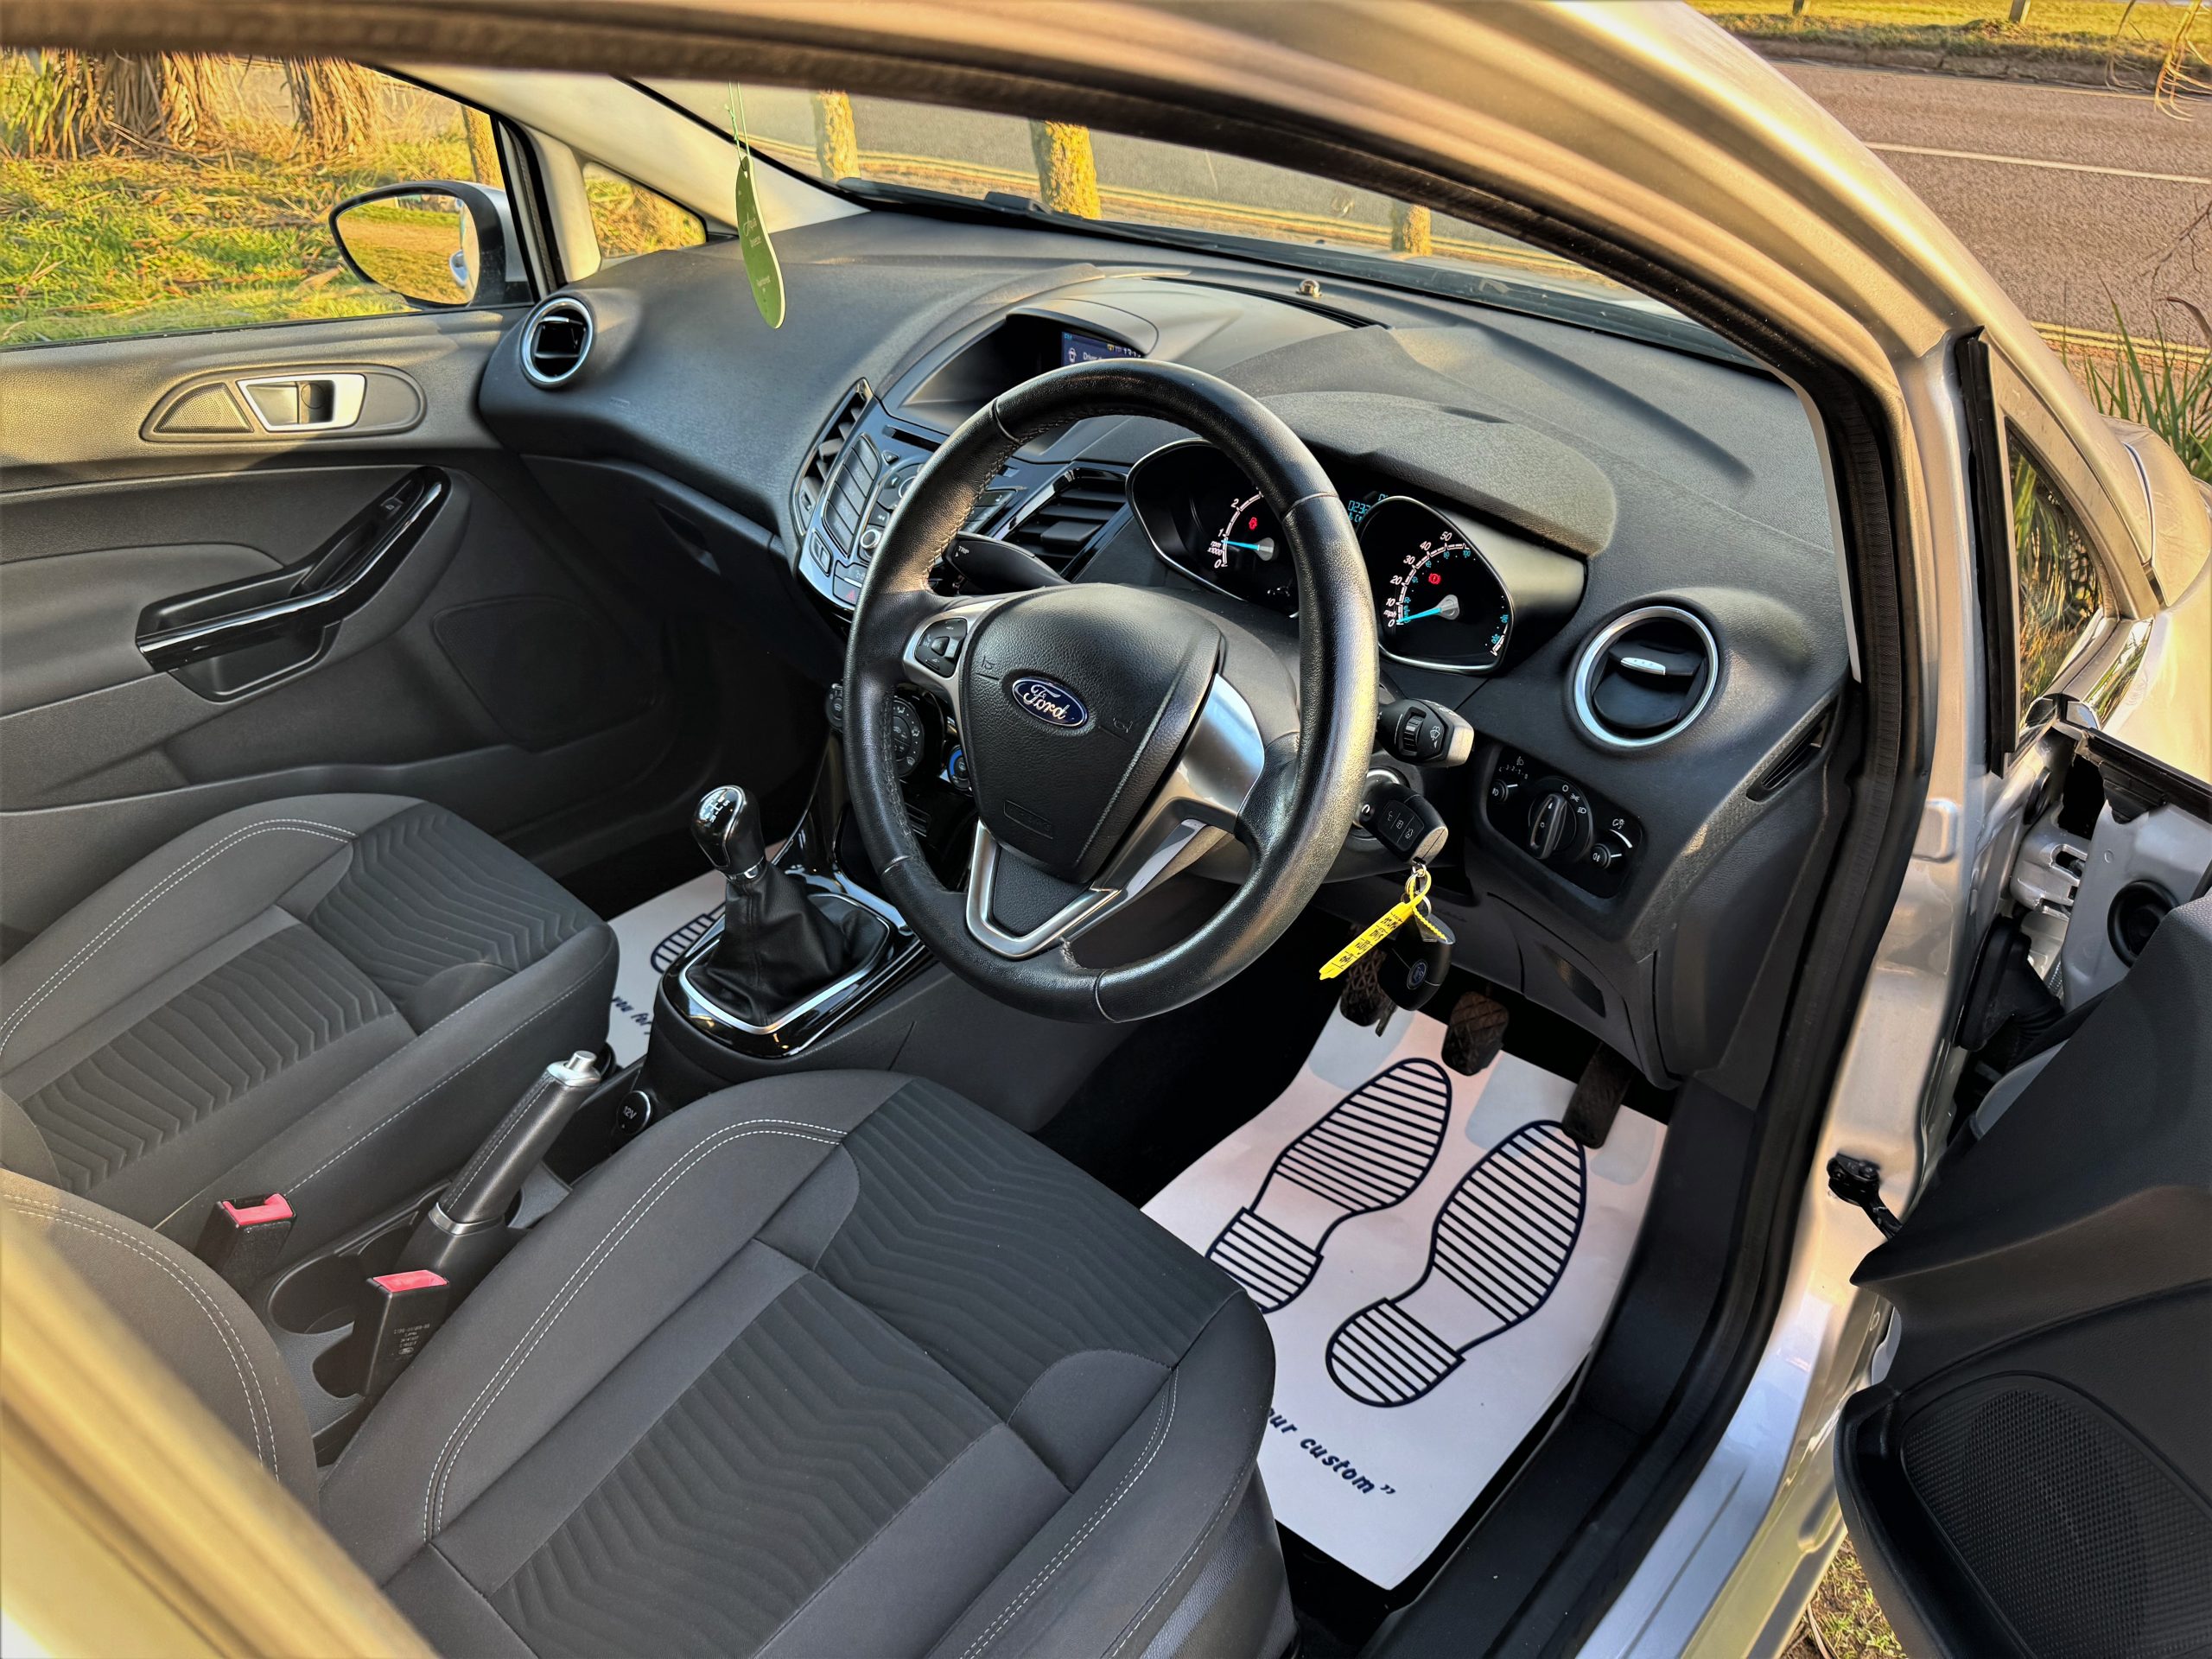 2017 Ford Fiesta 1.25 Zetec 5dr